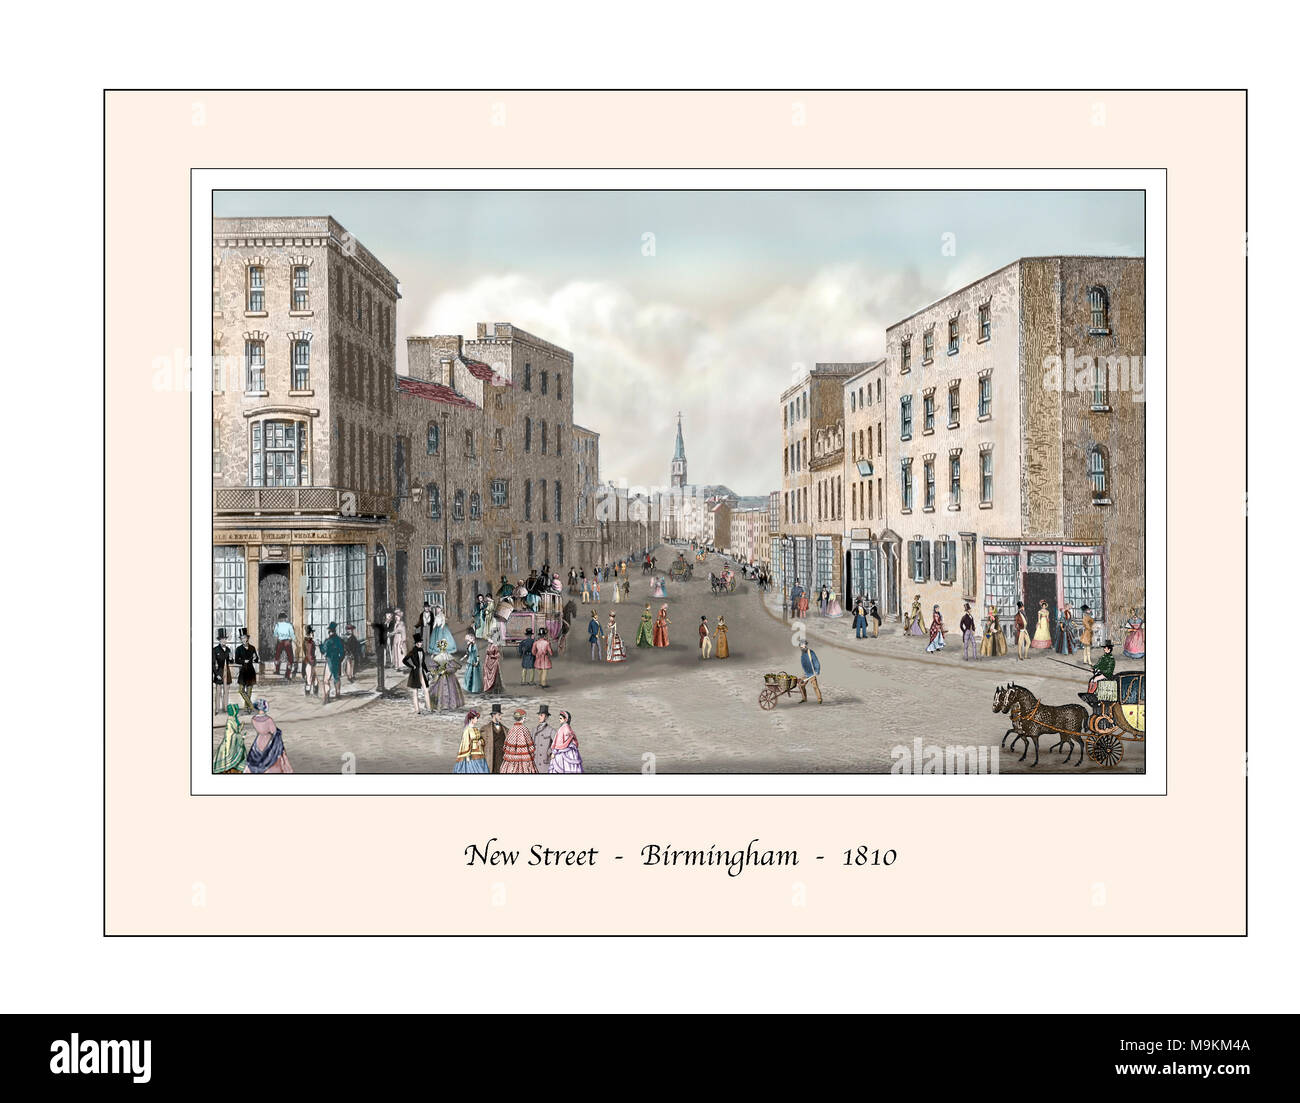 Birmingham New Street Original Design from a 19th century Engraving Stock Photo